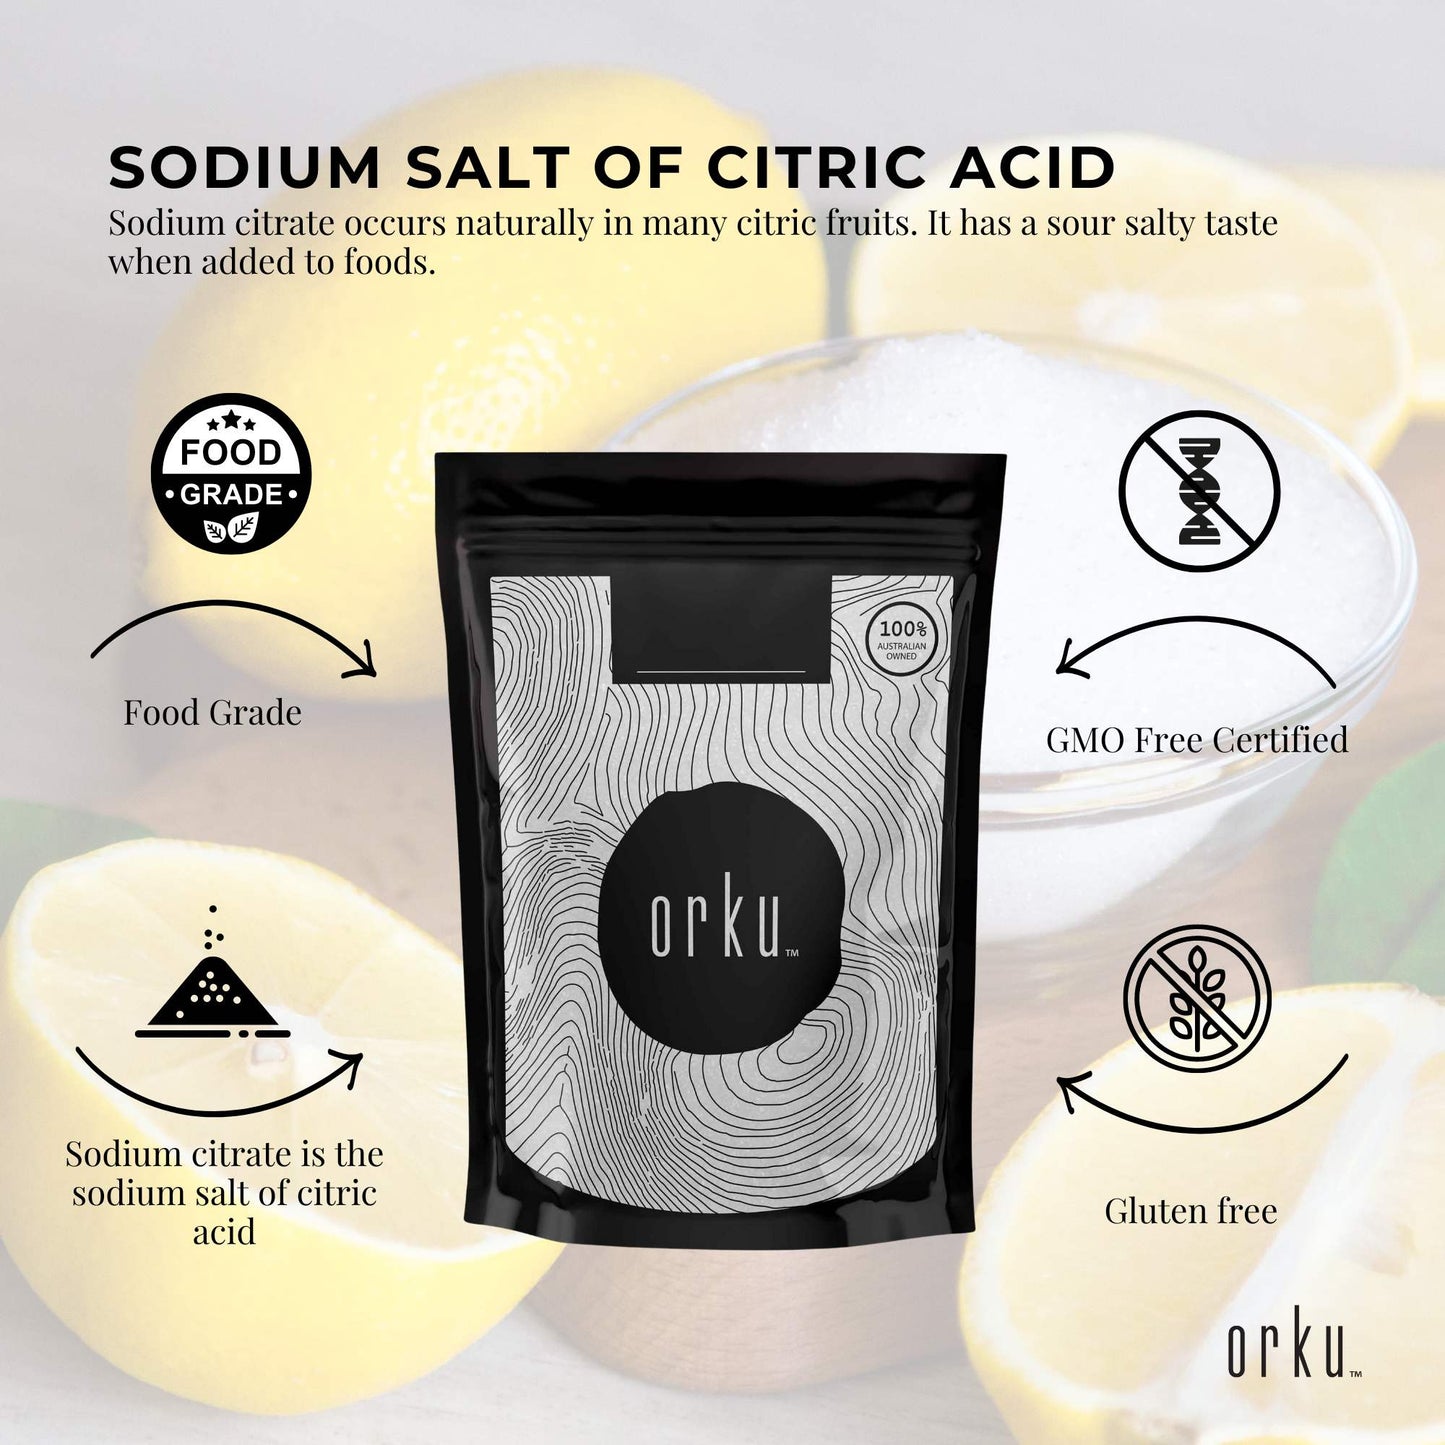 1Kg Sodium Citrate Powder - Trisodium Food Grade Salt Acid Preservative